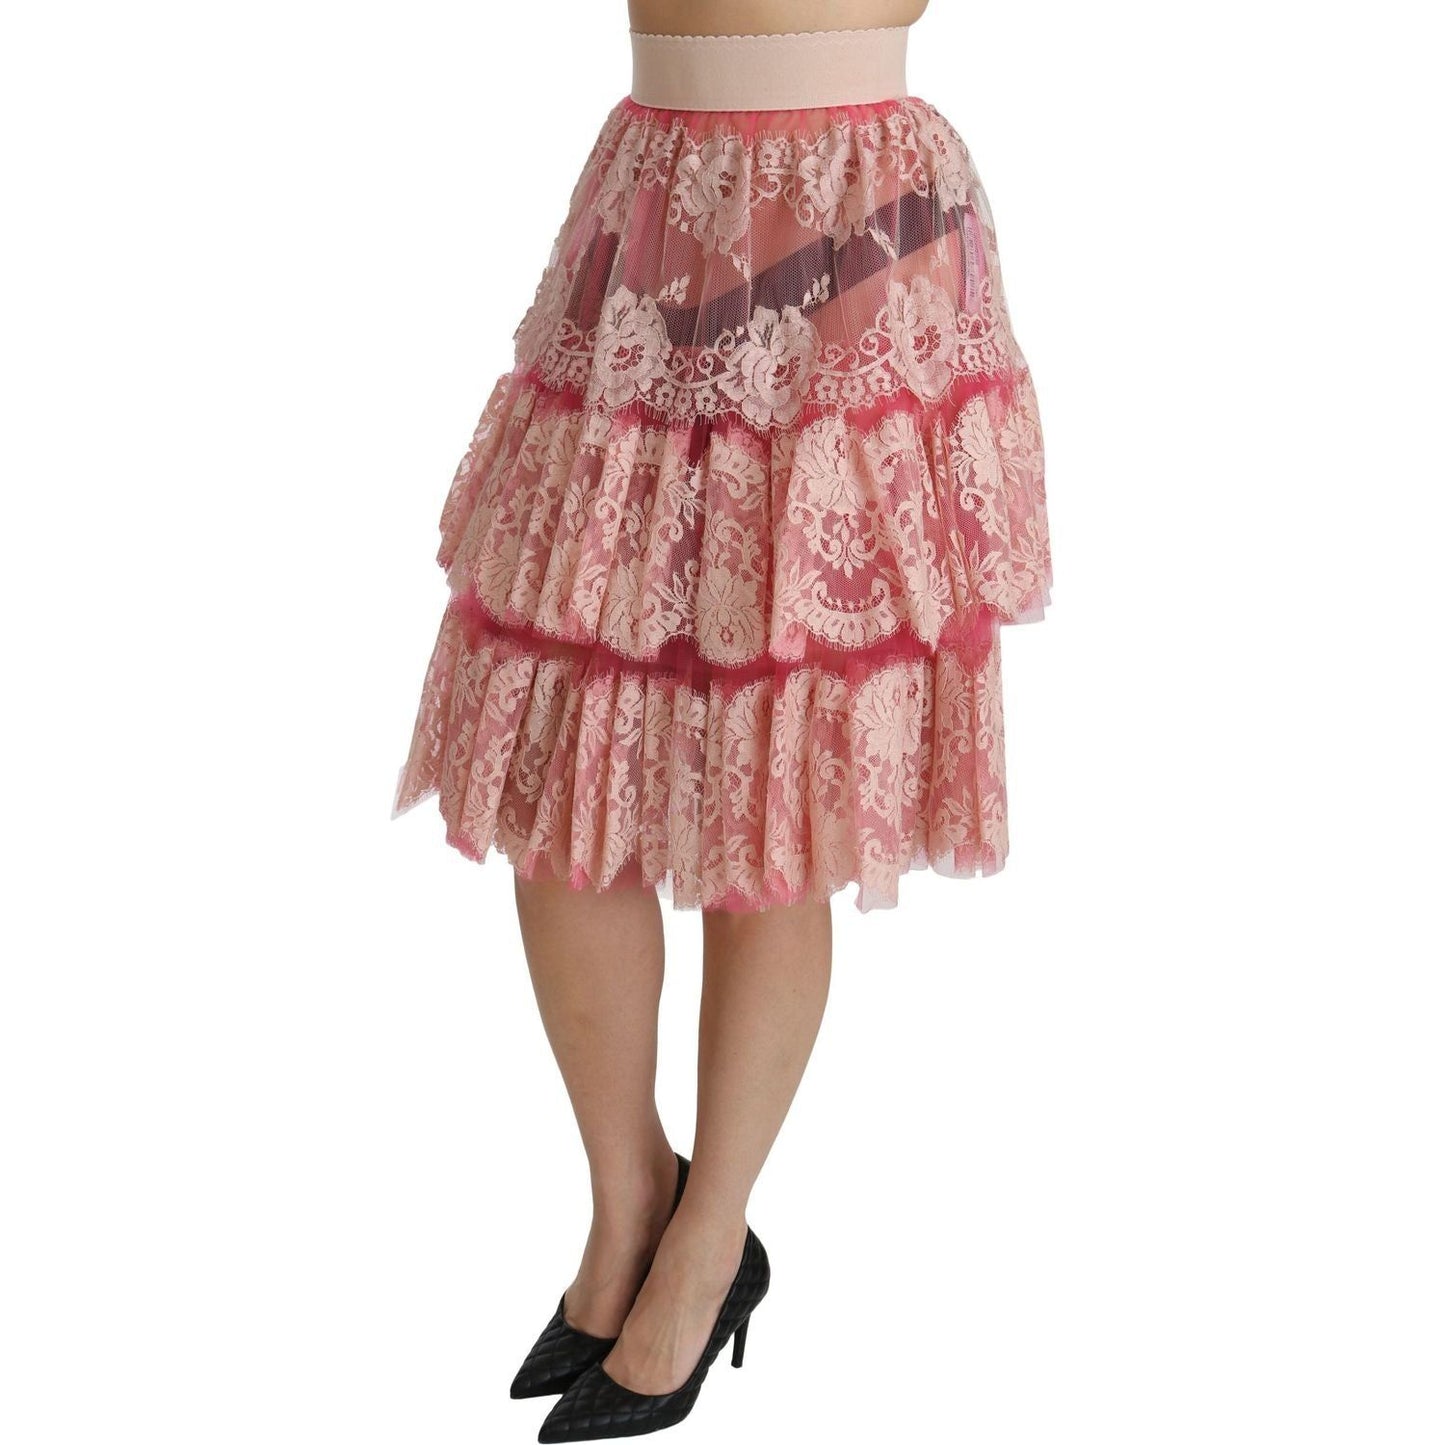 Dolce & Gabbana Elegant Pink Lace High-Waist Skirt pink-lace-layered-high-waist-knee-length-skirt